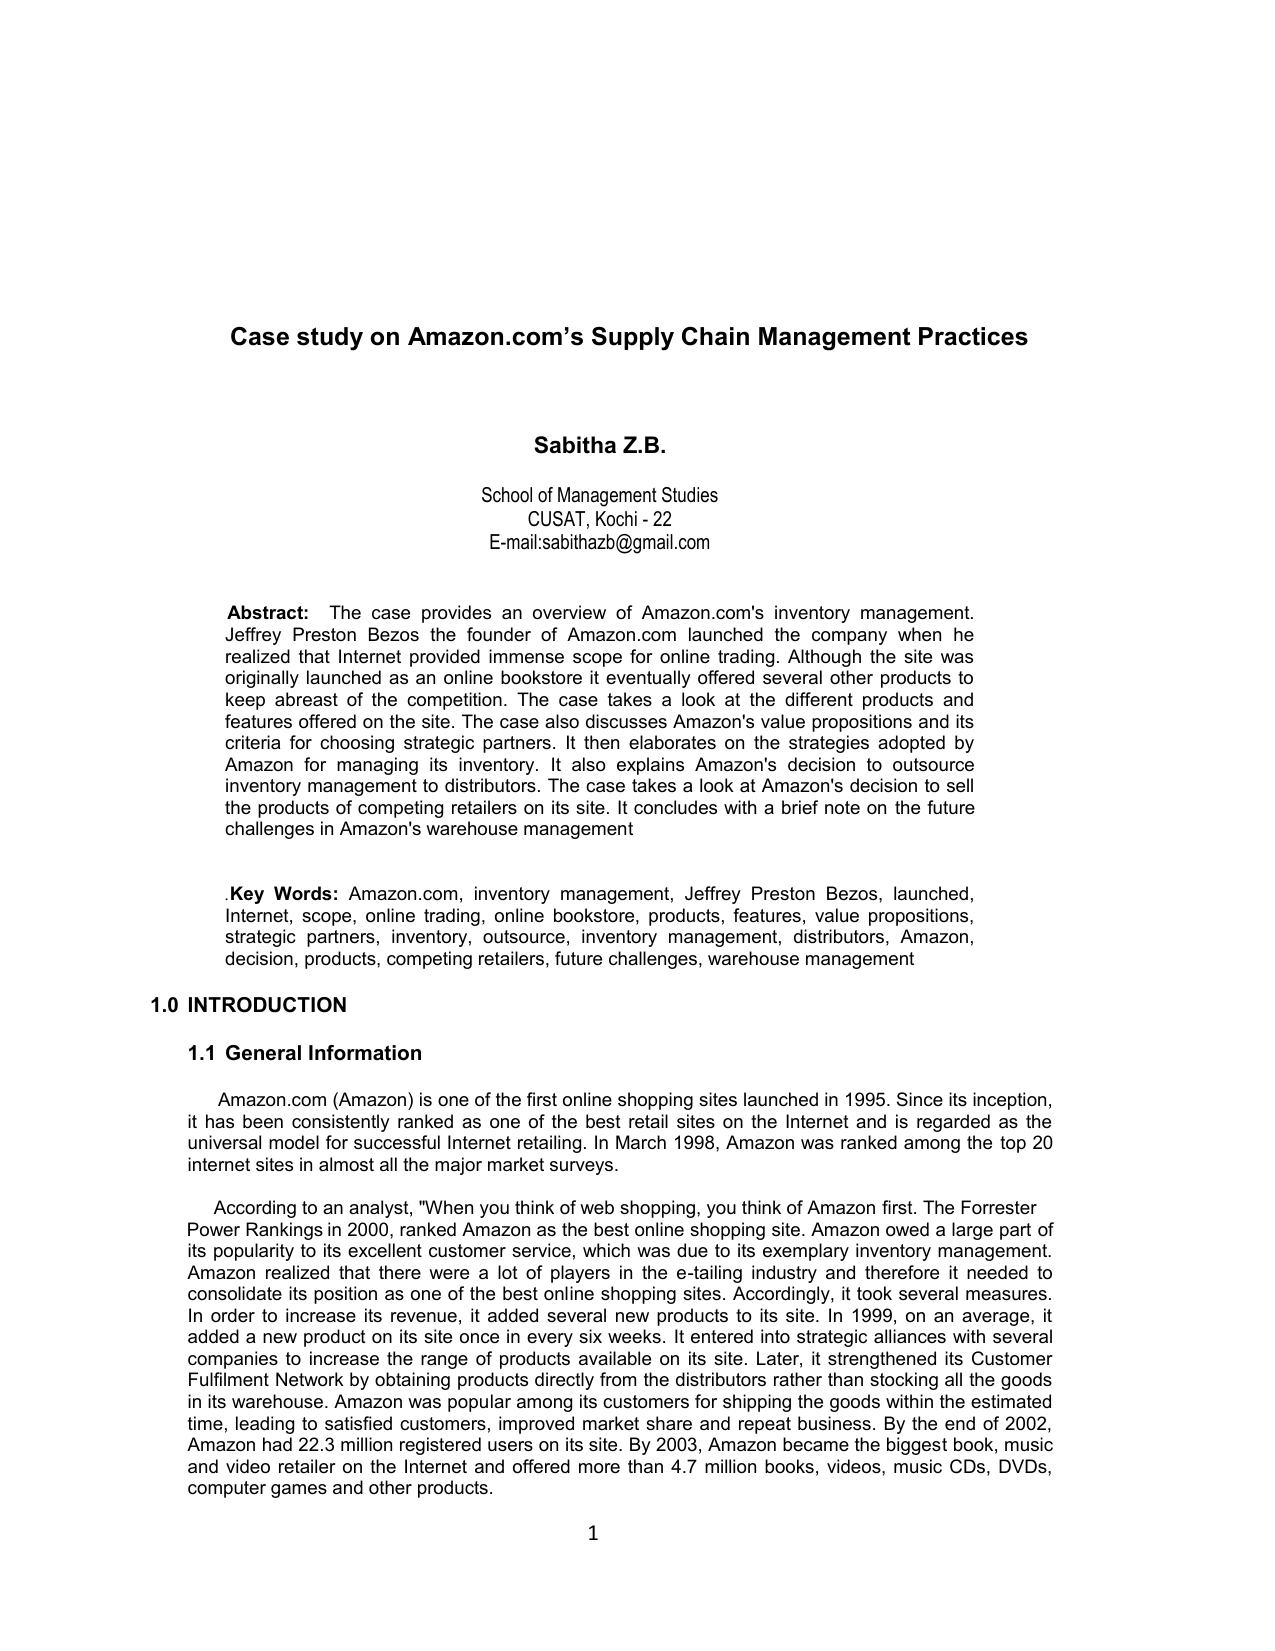 scope study inventory management